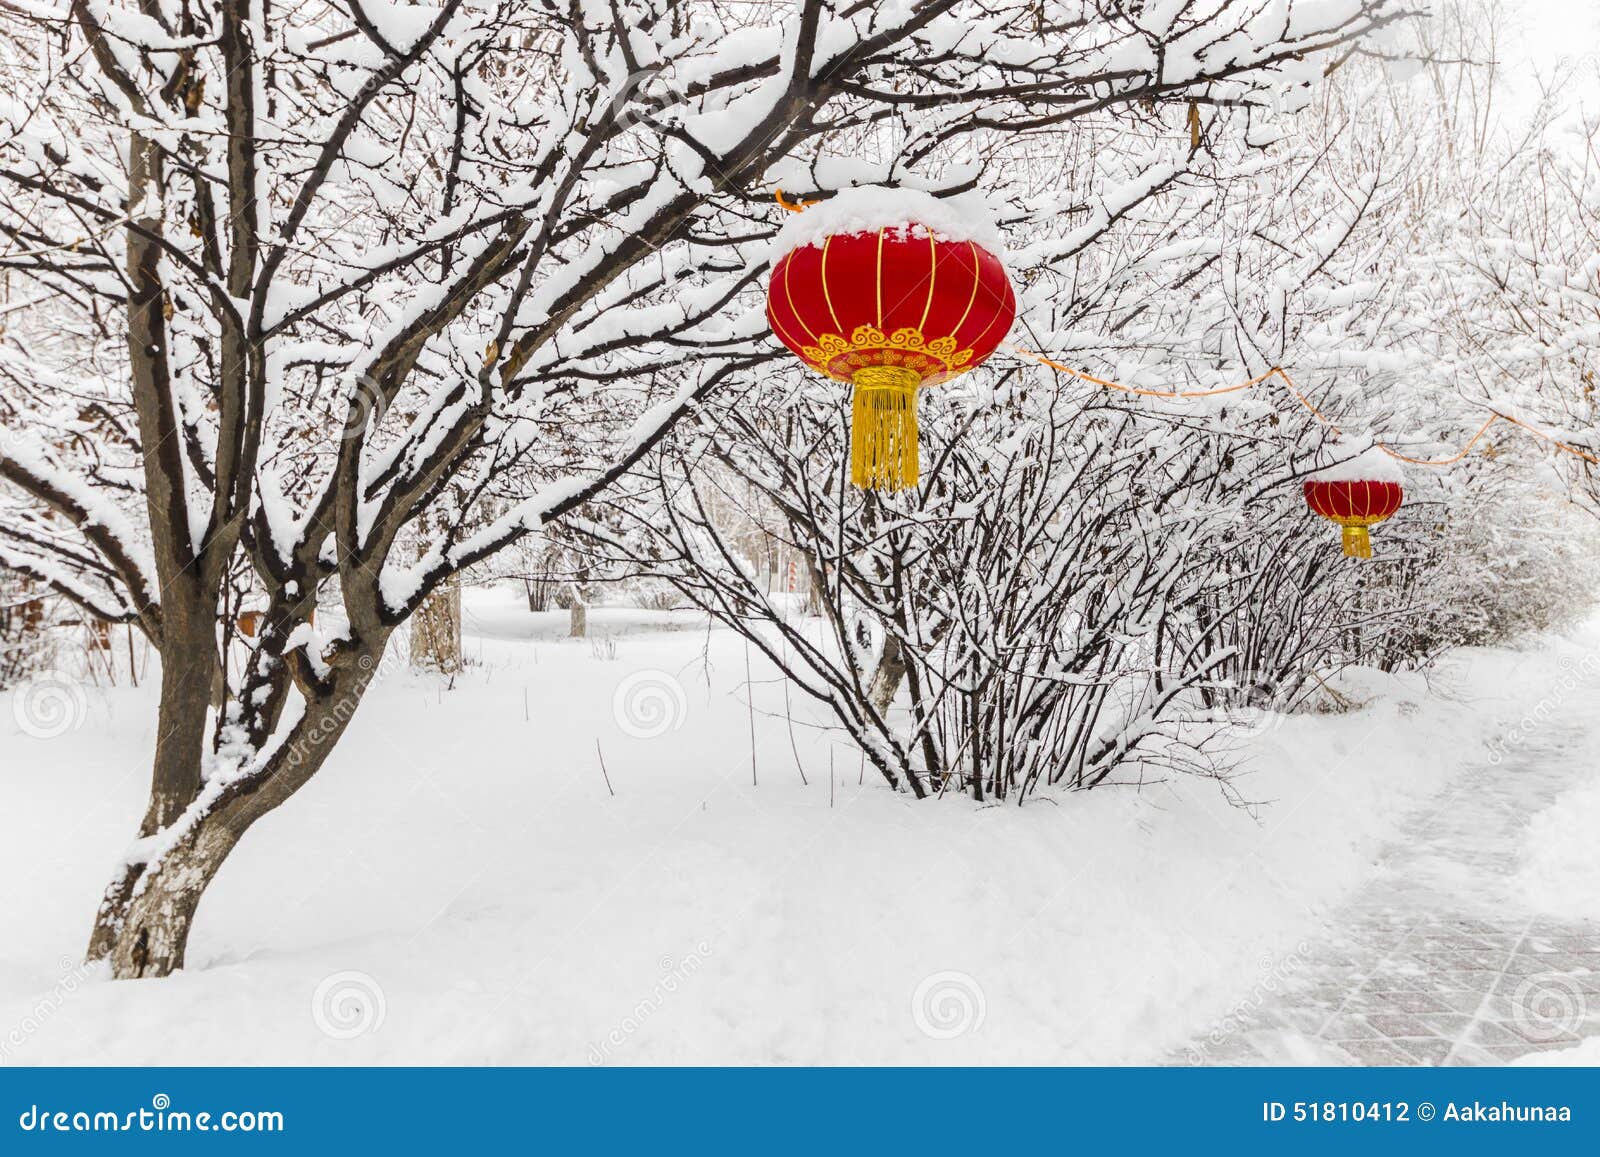 chinese red lantern northeast snow tree